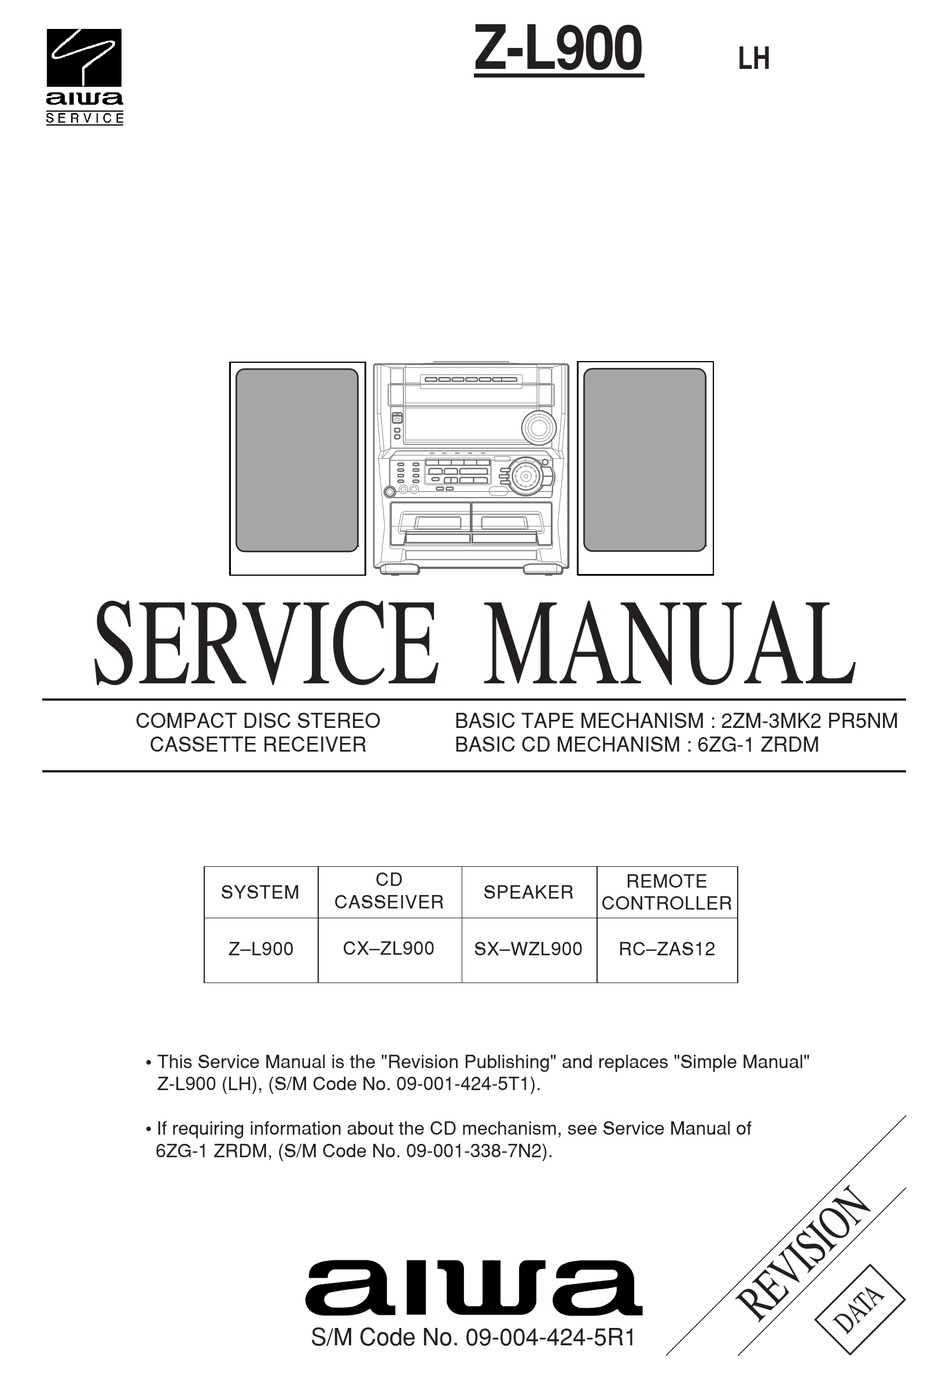 AIWA Z-L900 SERVICE MANUAL Pdf Download | ManualsLib